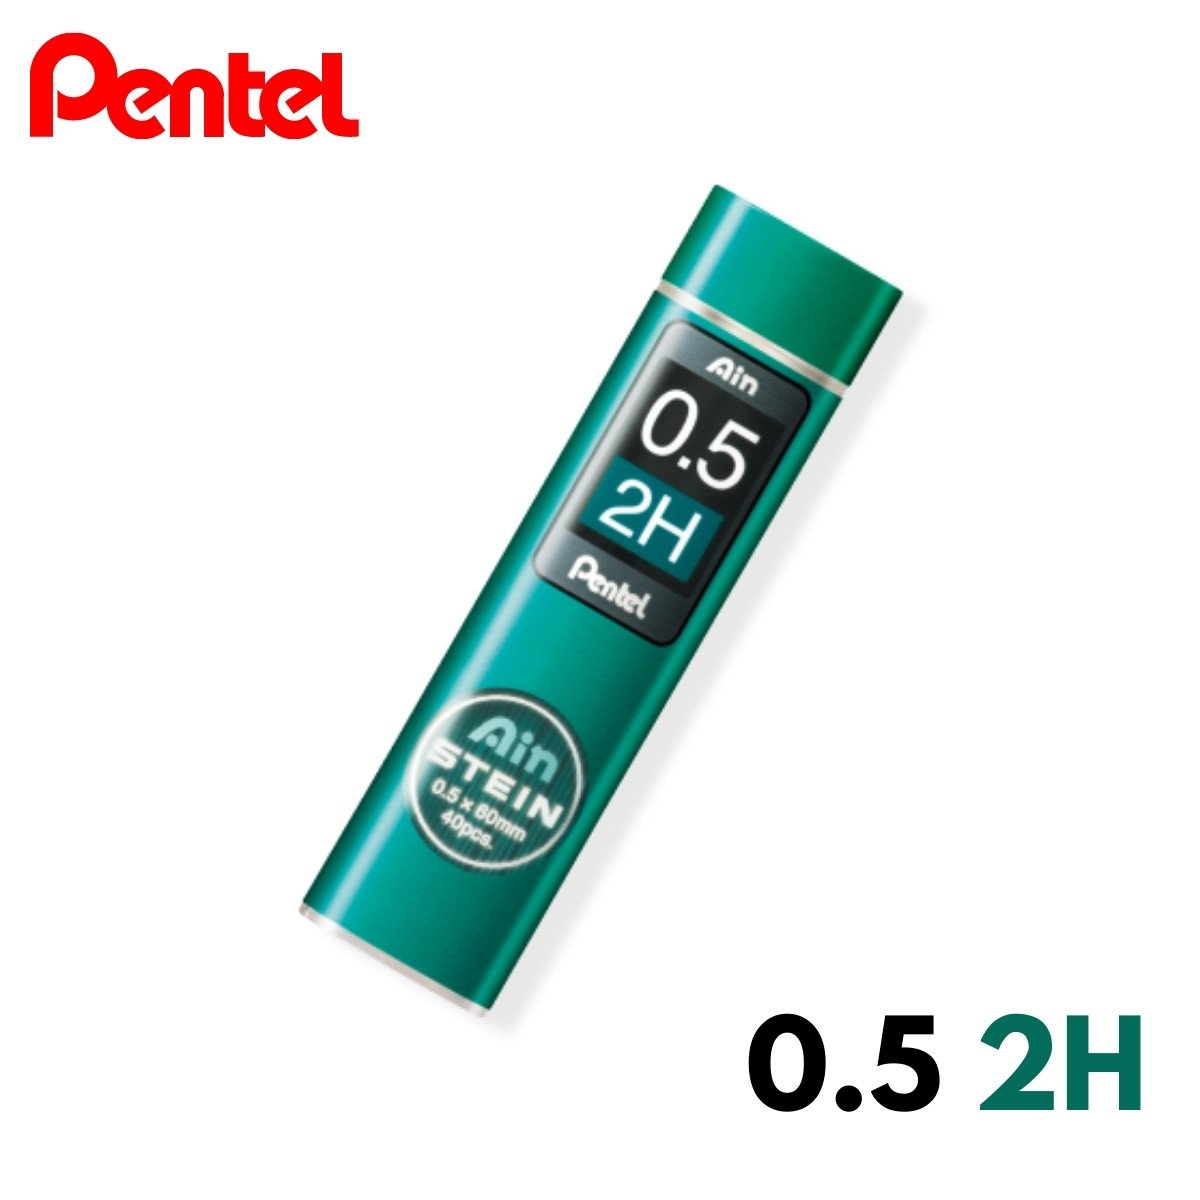 Pentel Ain Stein Kalem Ucu Hi-Polymer 0,5mm 2H 40 Adetlik Tüp